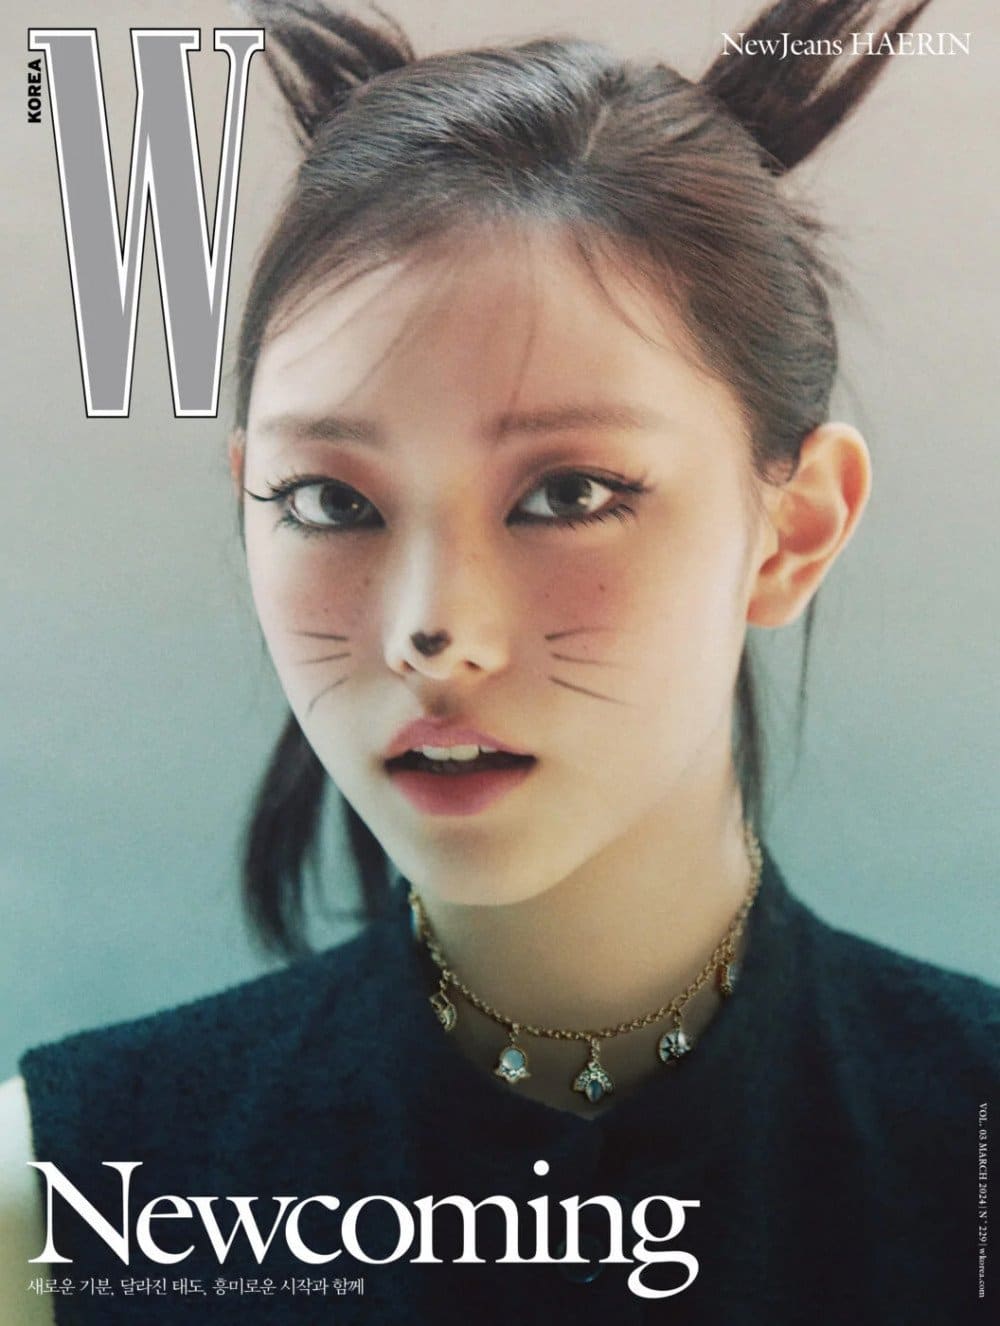 Хэрин из NewJeans и TOMORROW x TOGETHER на мартовской обложке журнала "W Korea"